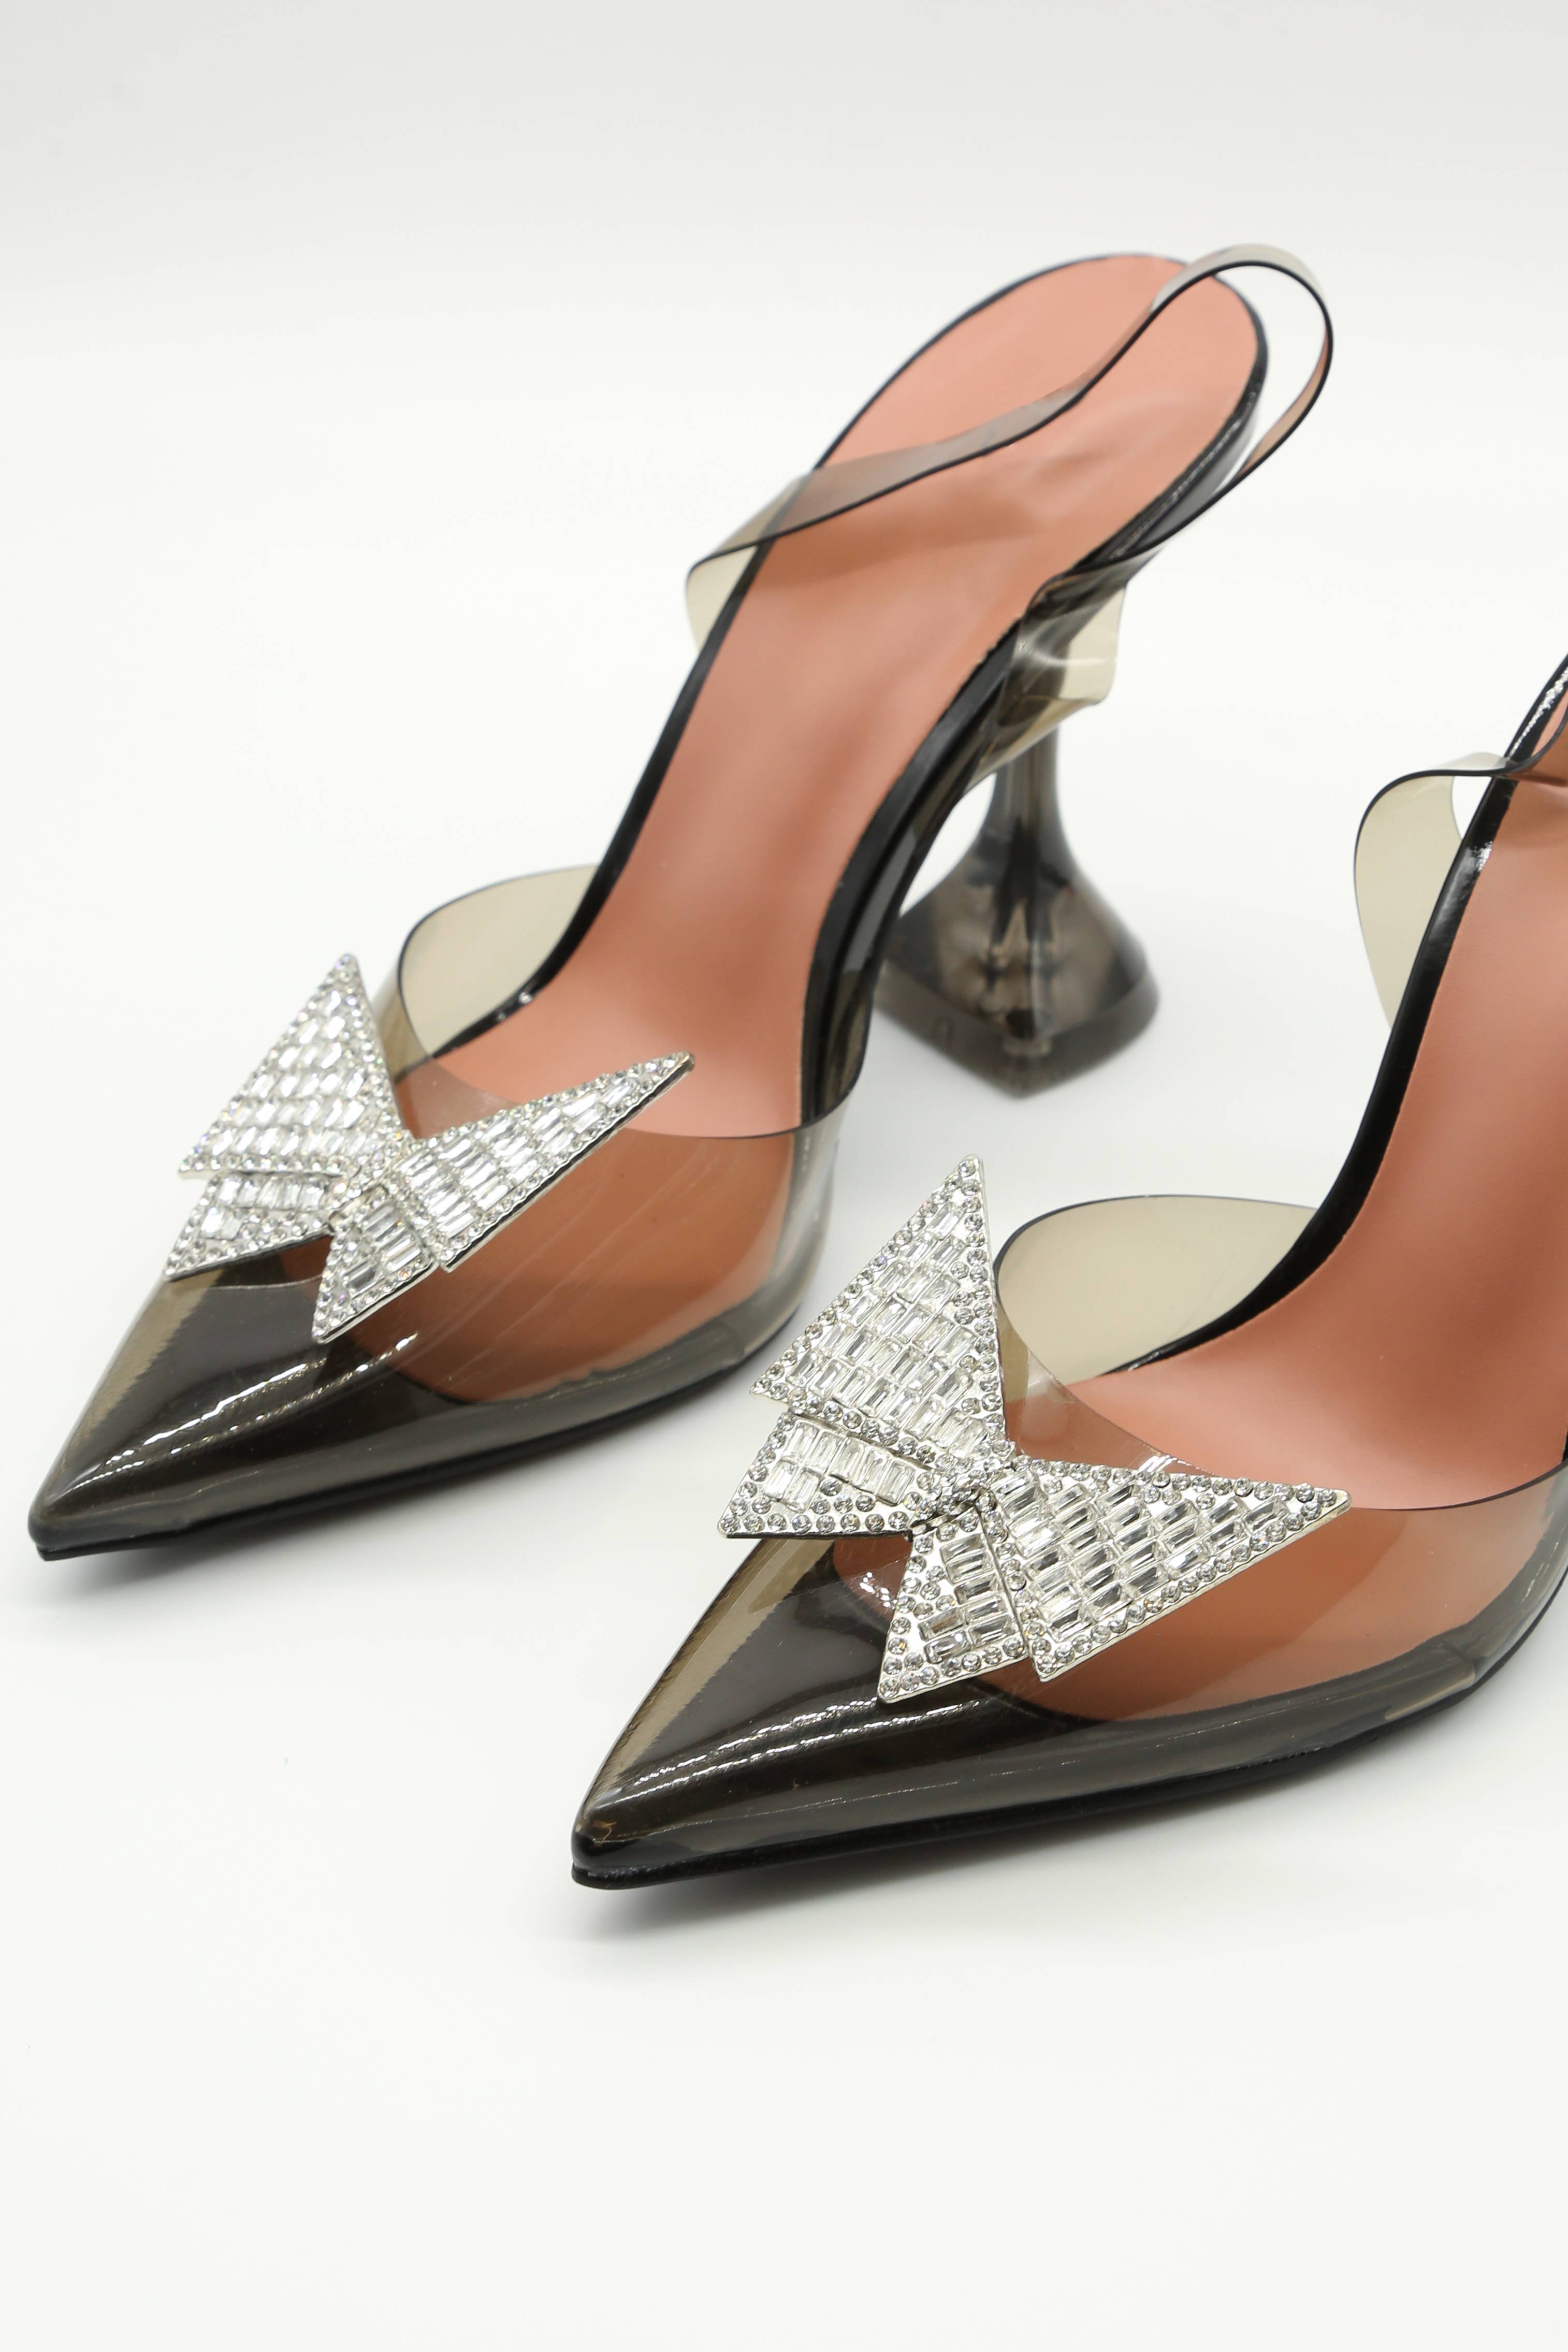 Manolo blahnik Black Crystal Buckle Heels for Women Online India at  Darveys.com